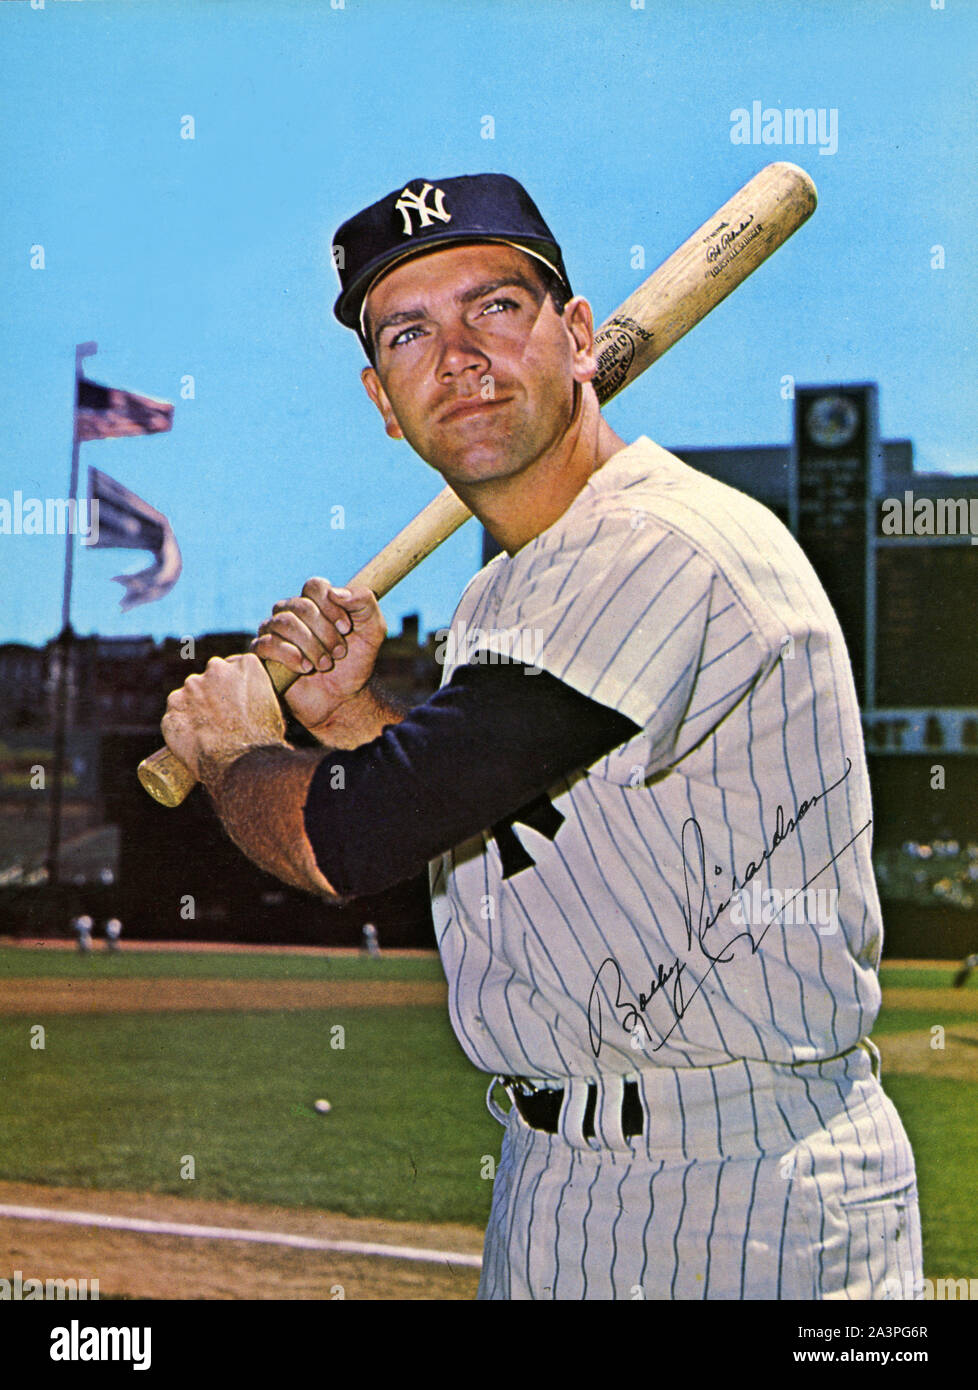 News on January 19, 1966: New York Yankees catcher Elston Howard